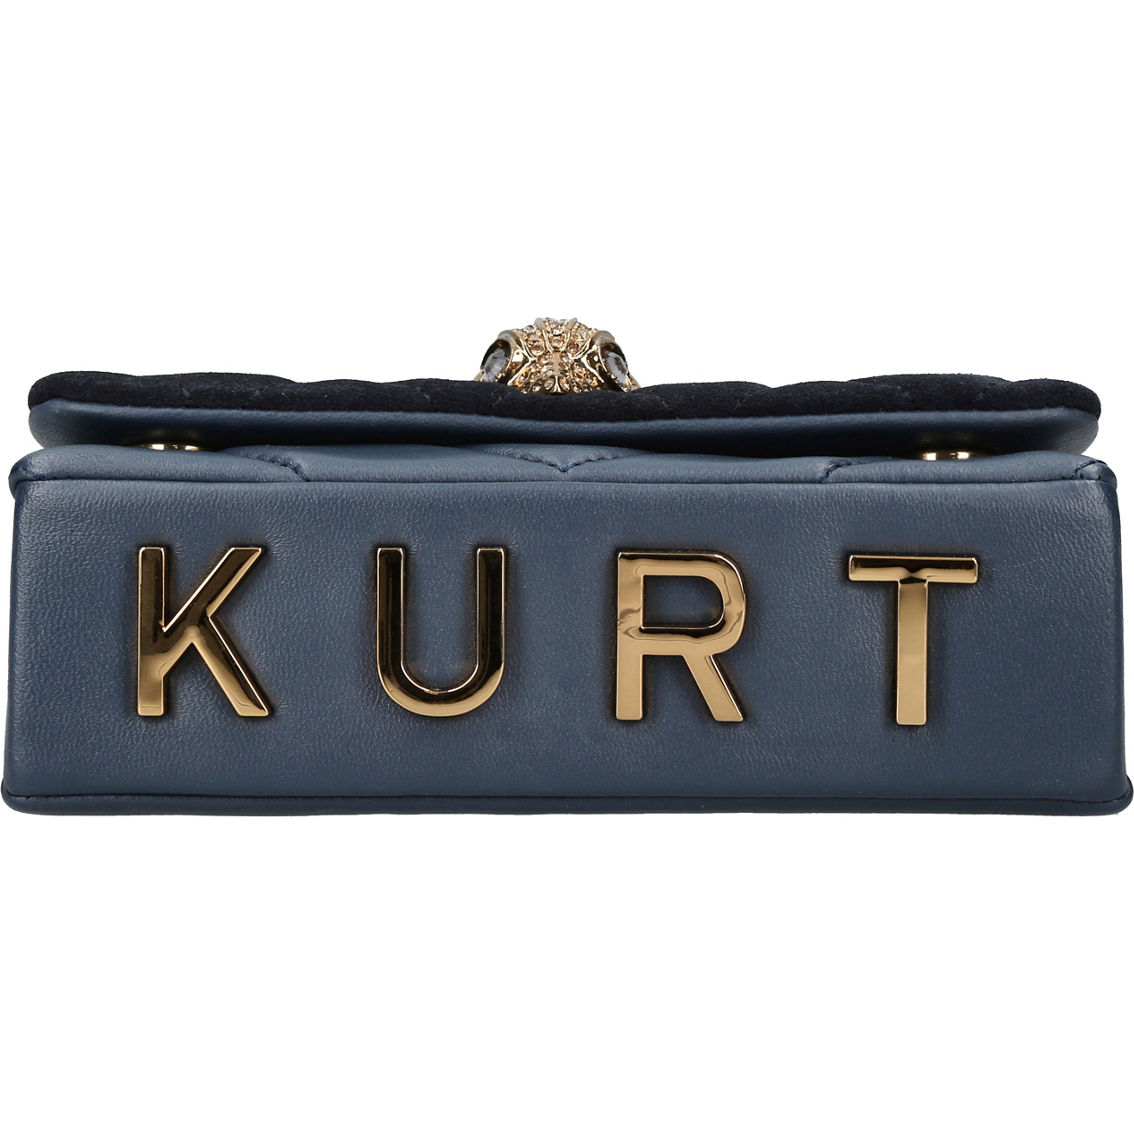 Kurt Geiger Mini Kensington Bag - Image 5 of 5